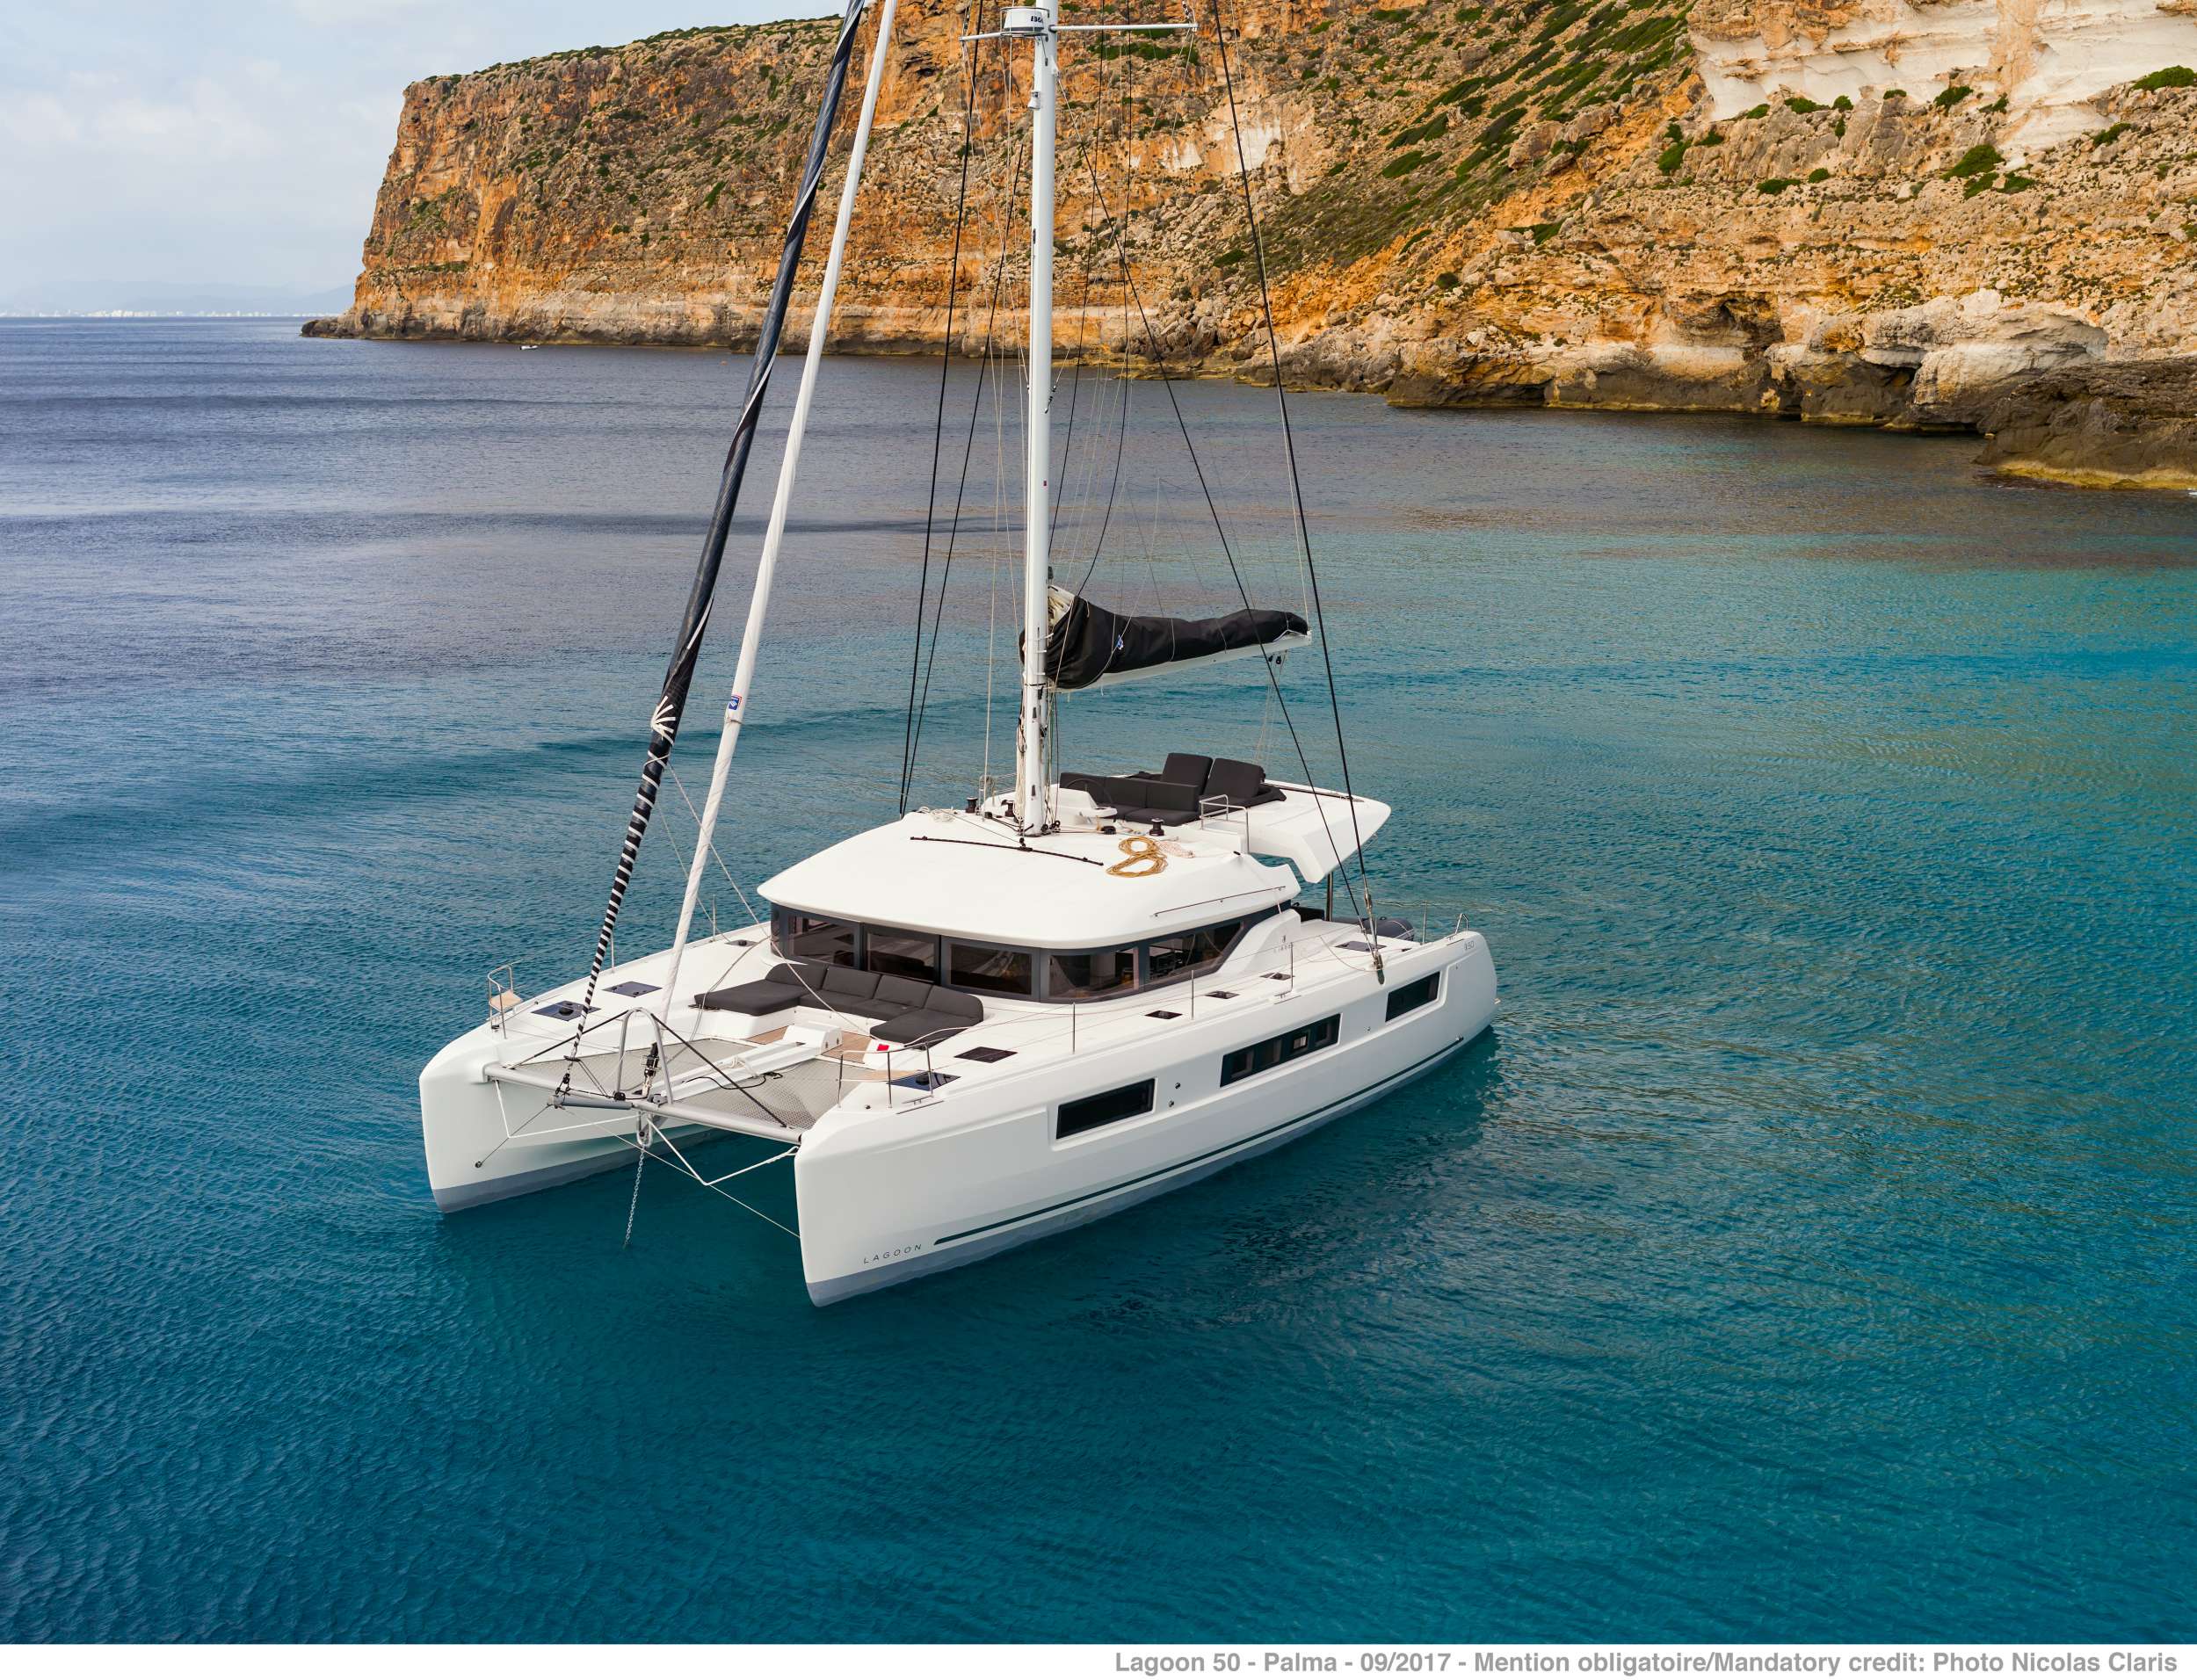 ONEIDA 2 - Yacht Charter Thasos & Boat hire in Greece 1